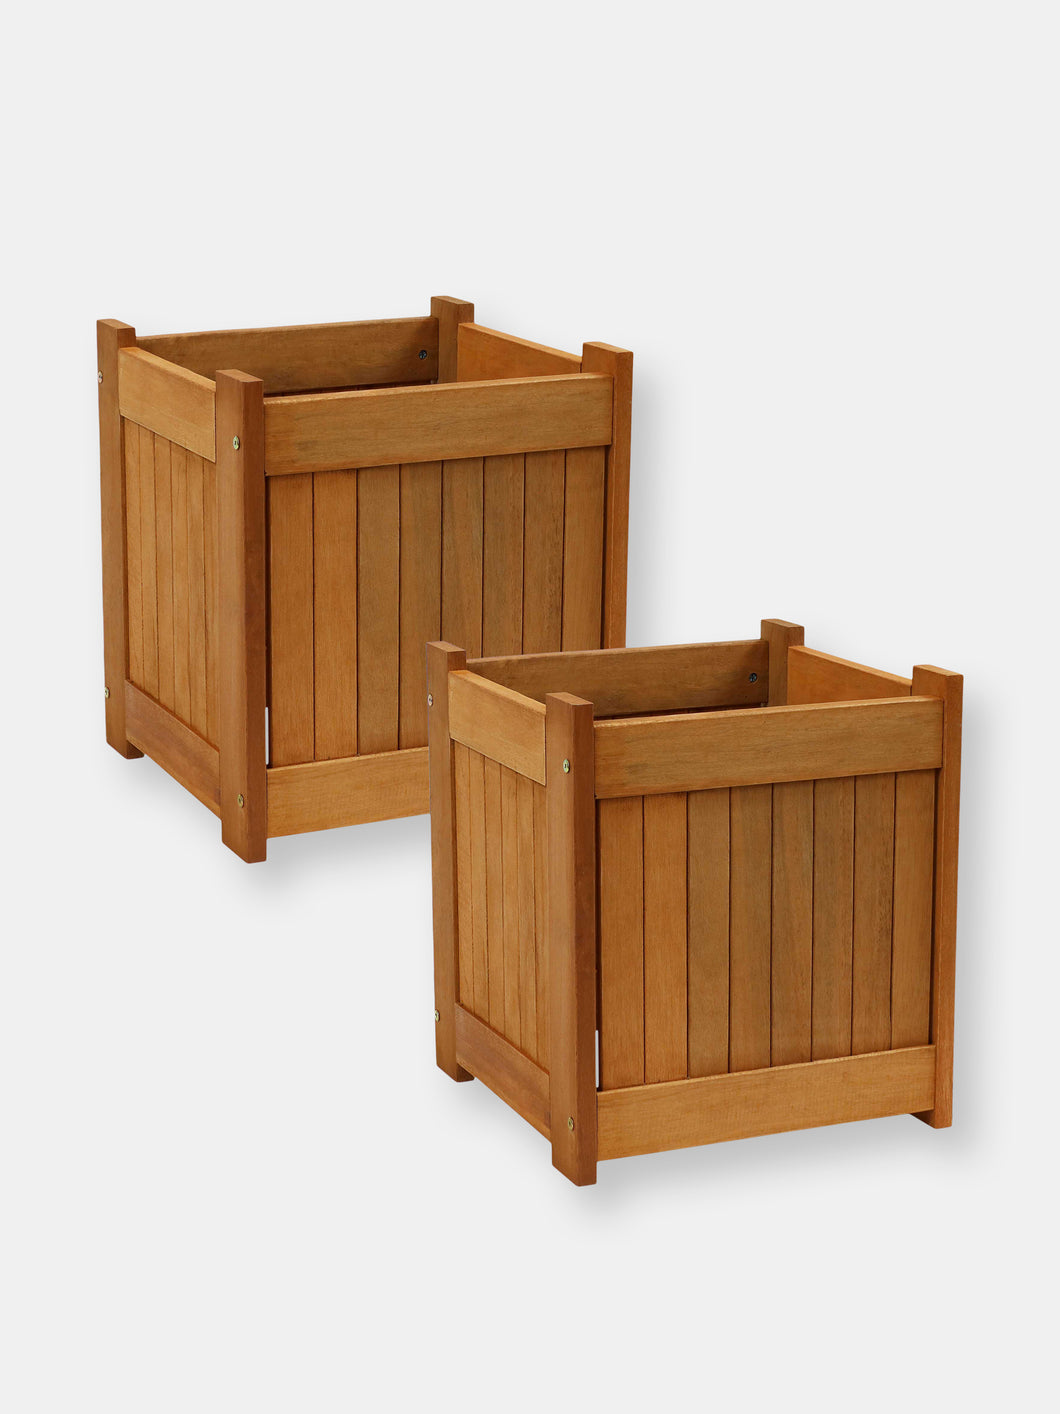 Meranti Wood Outdoor Planter Box